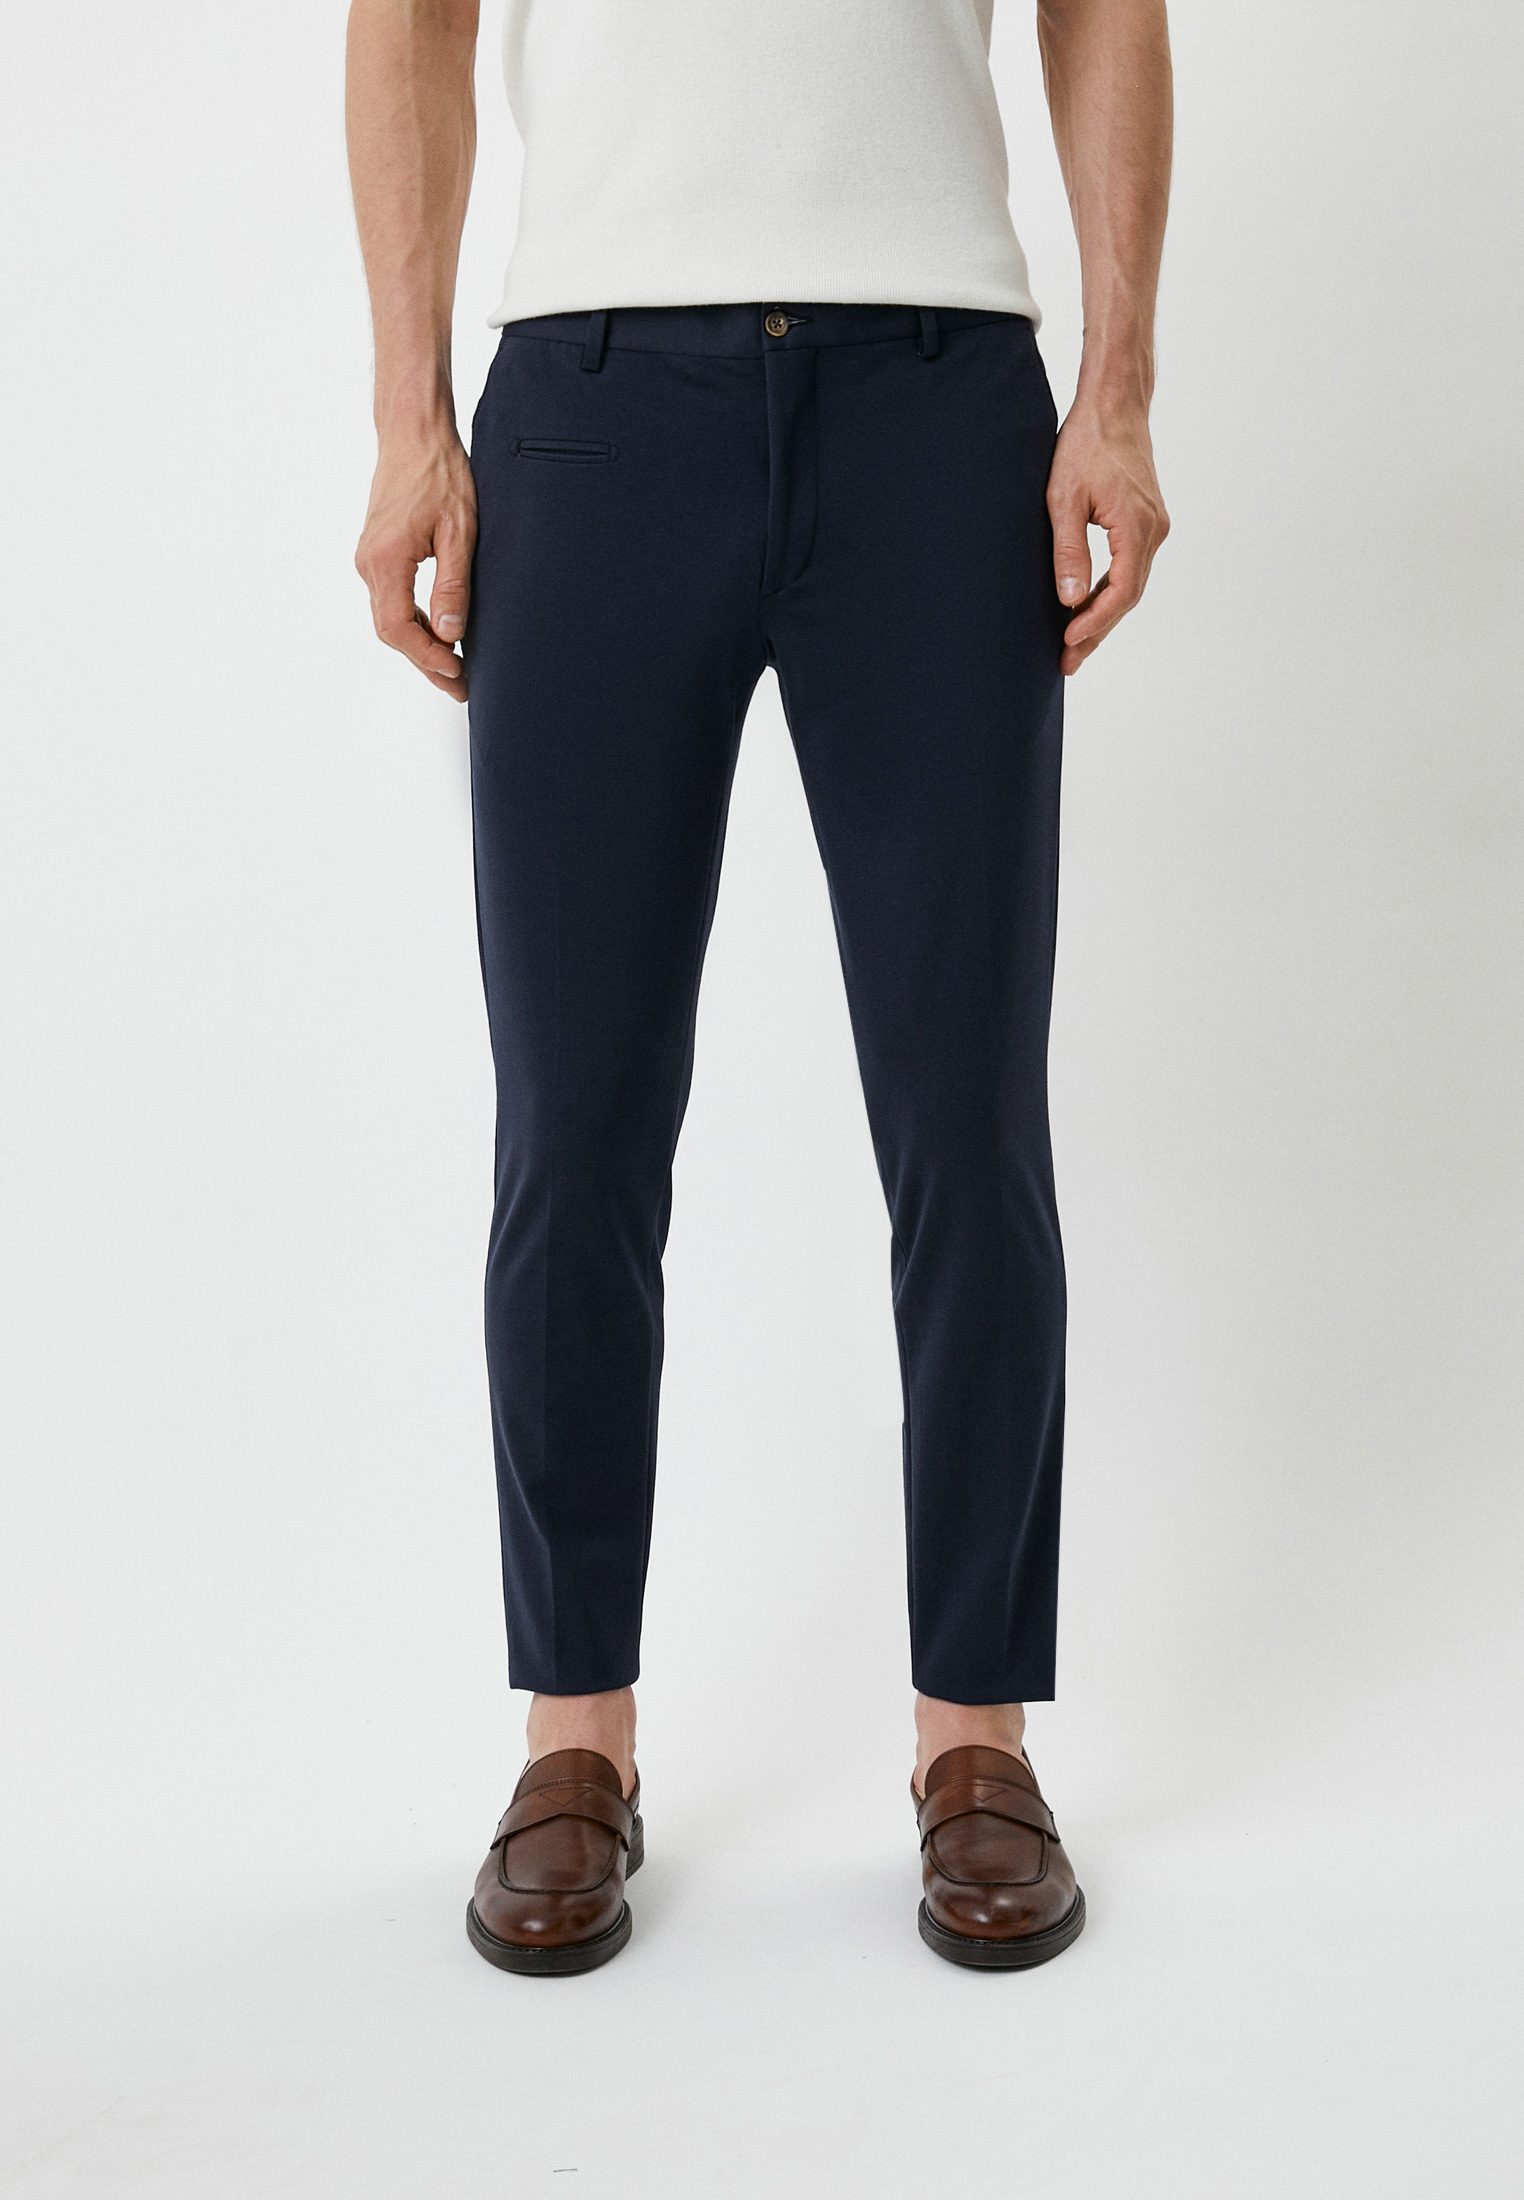 Мужские классические брюки Baldinini (Балдинини) M604: изображение 1